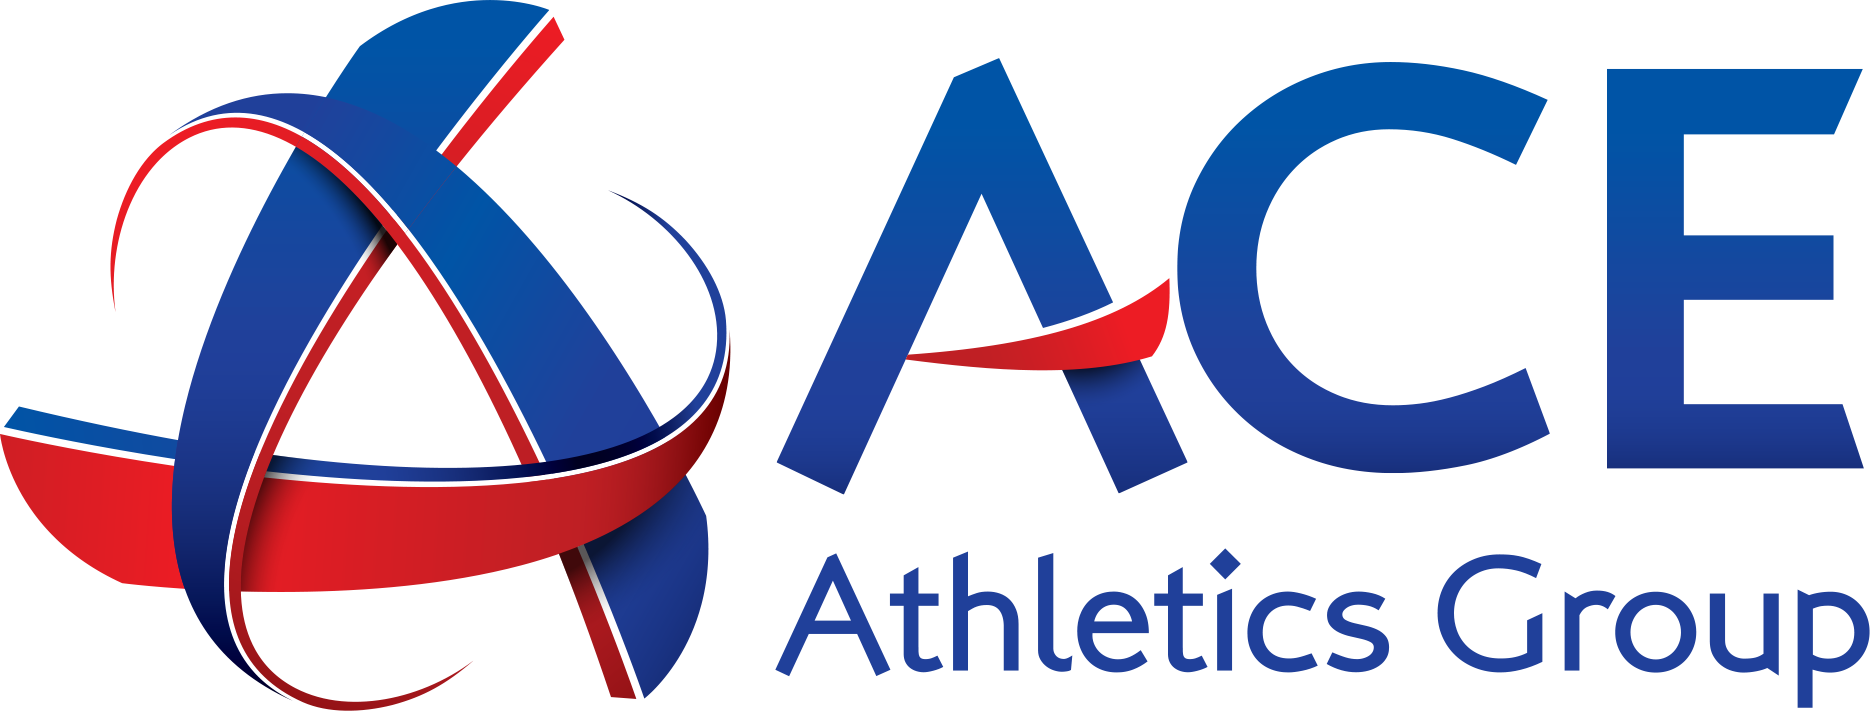 Ace Athletics Group Camo Classic Logo